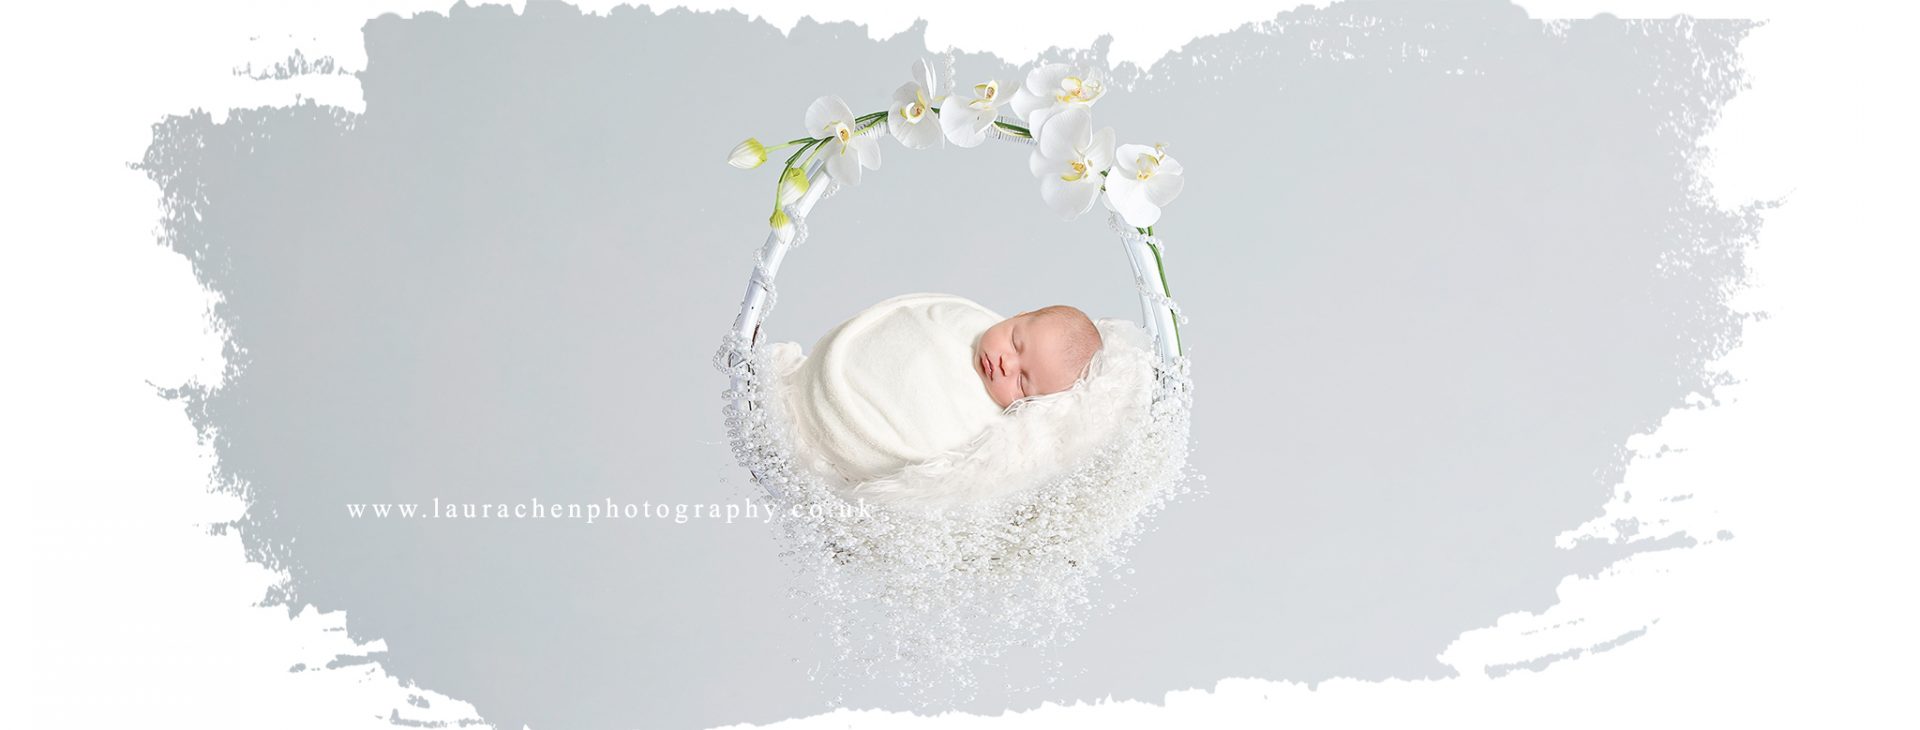 newborn photographer perth baby photography perthshire kinross dundee newborn photoshoot